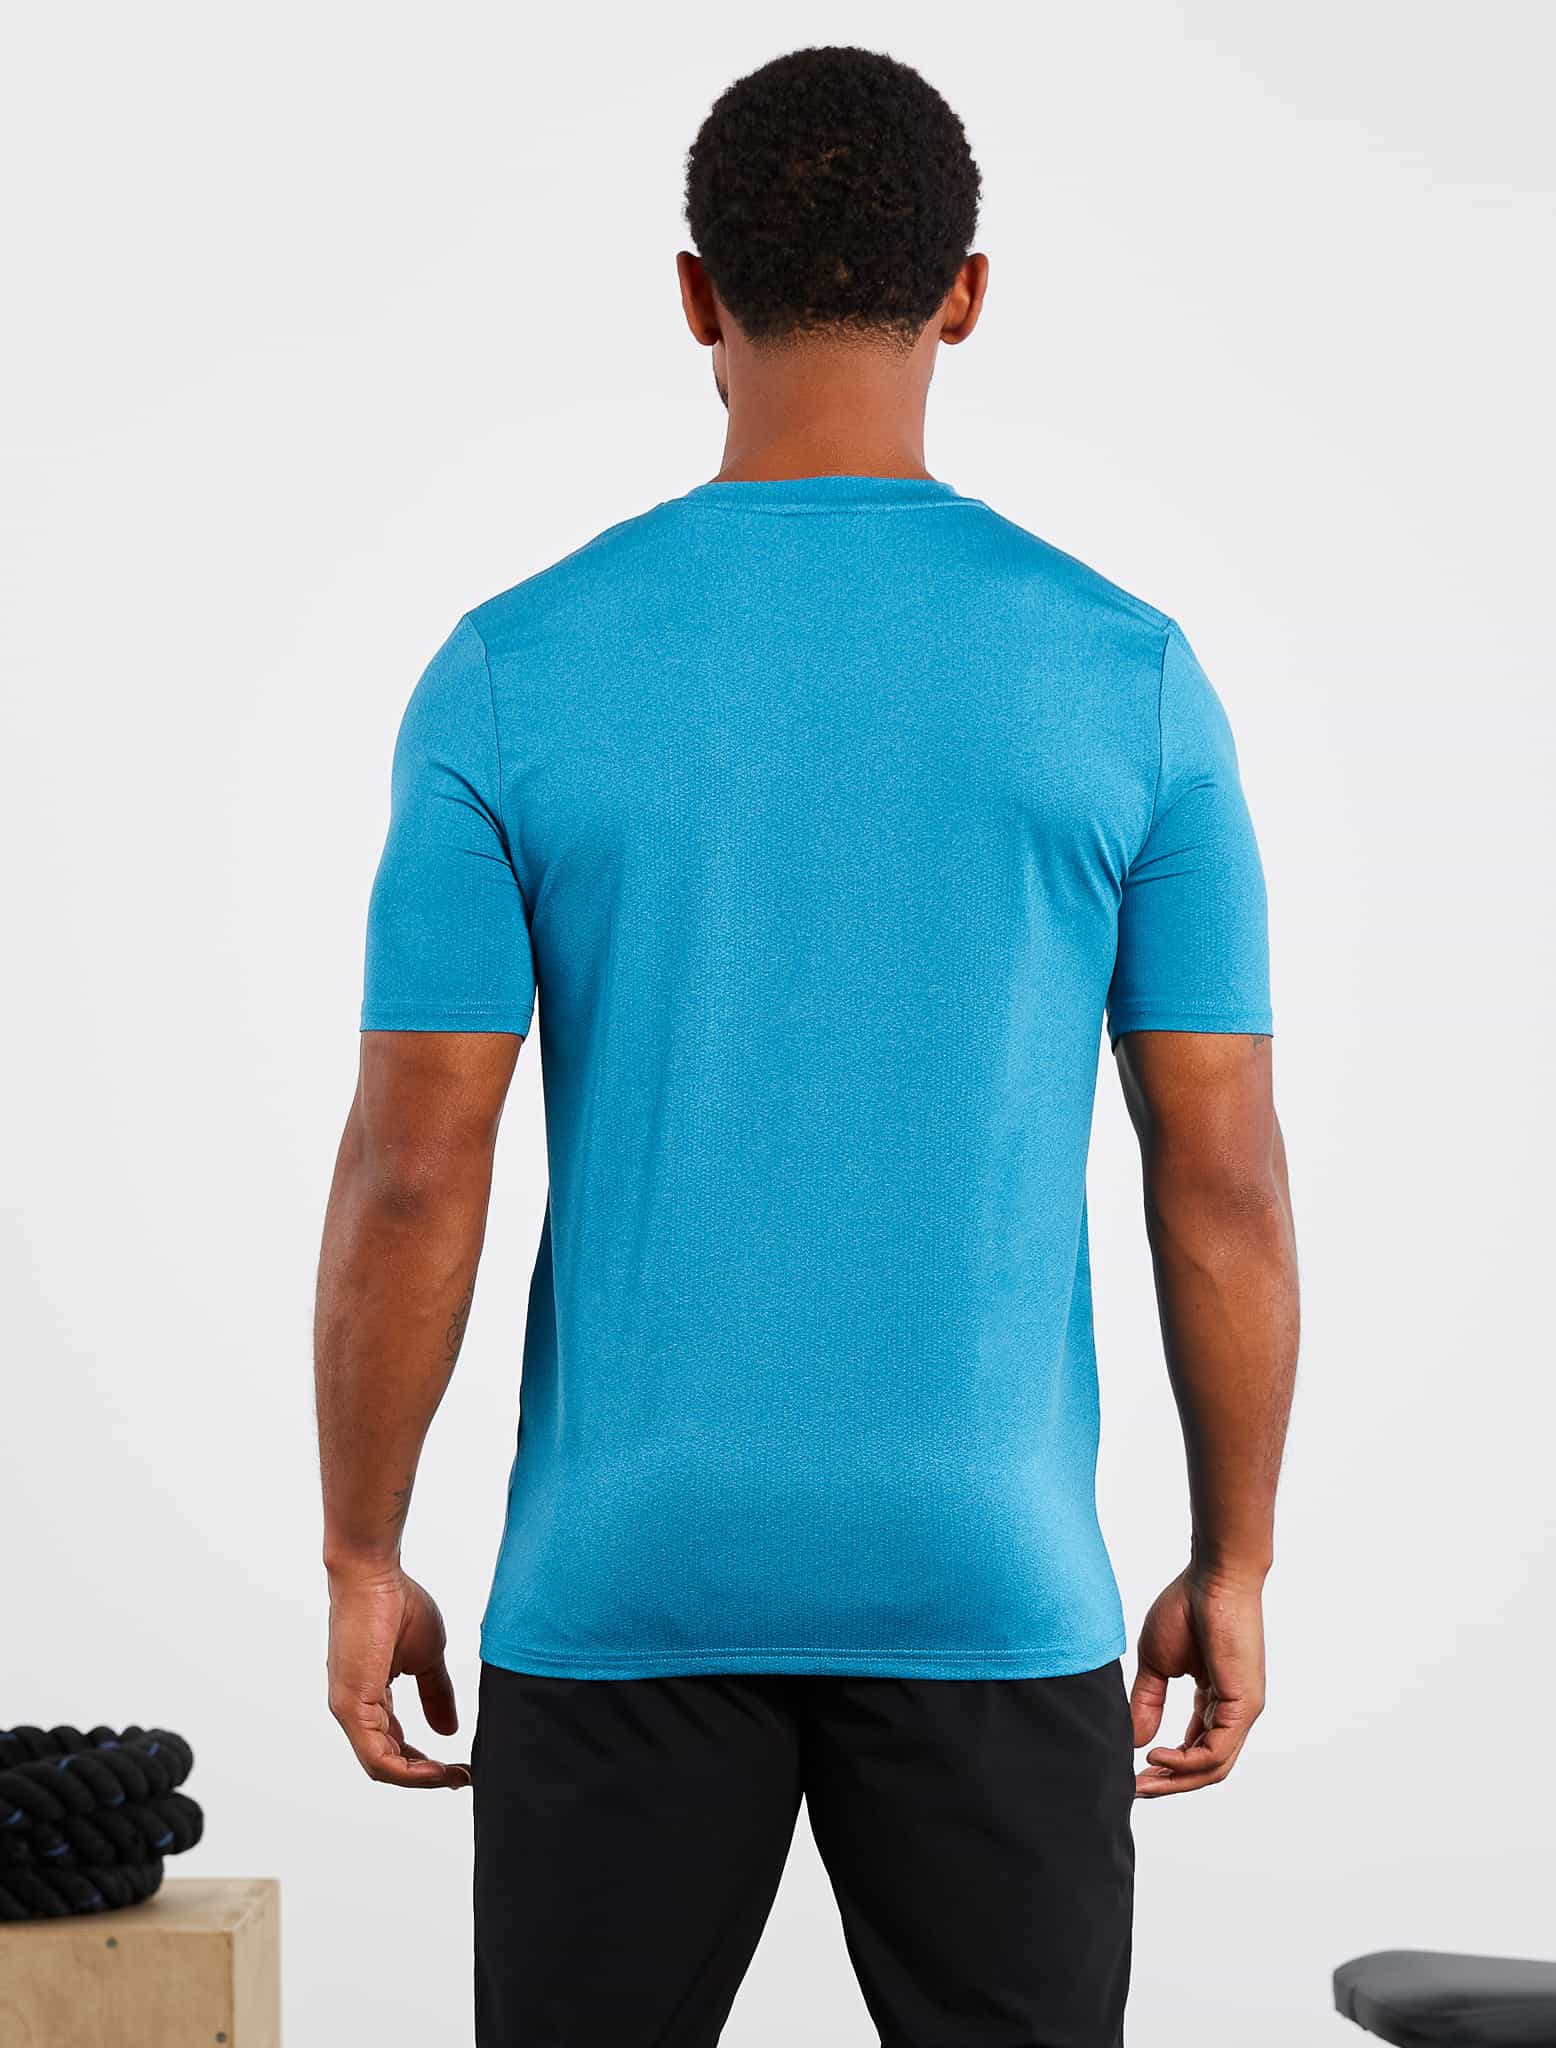 Training T-Shirt / Blue Pursue Fitness 2